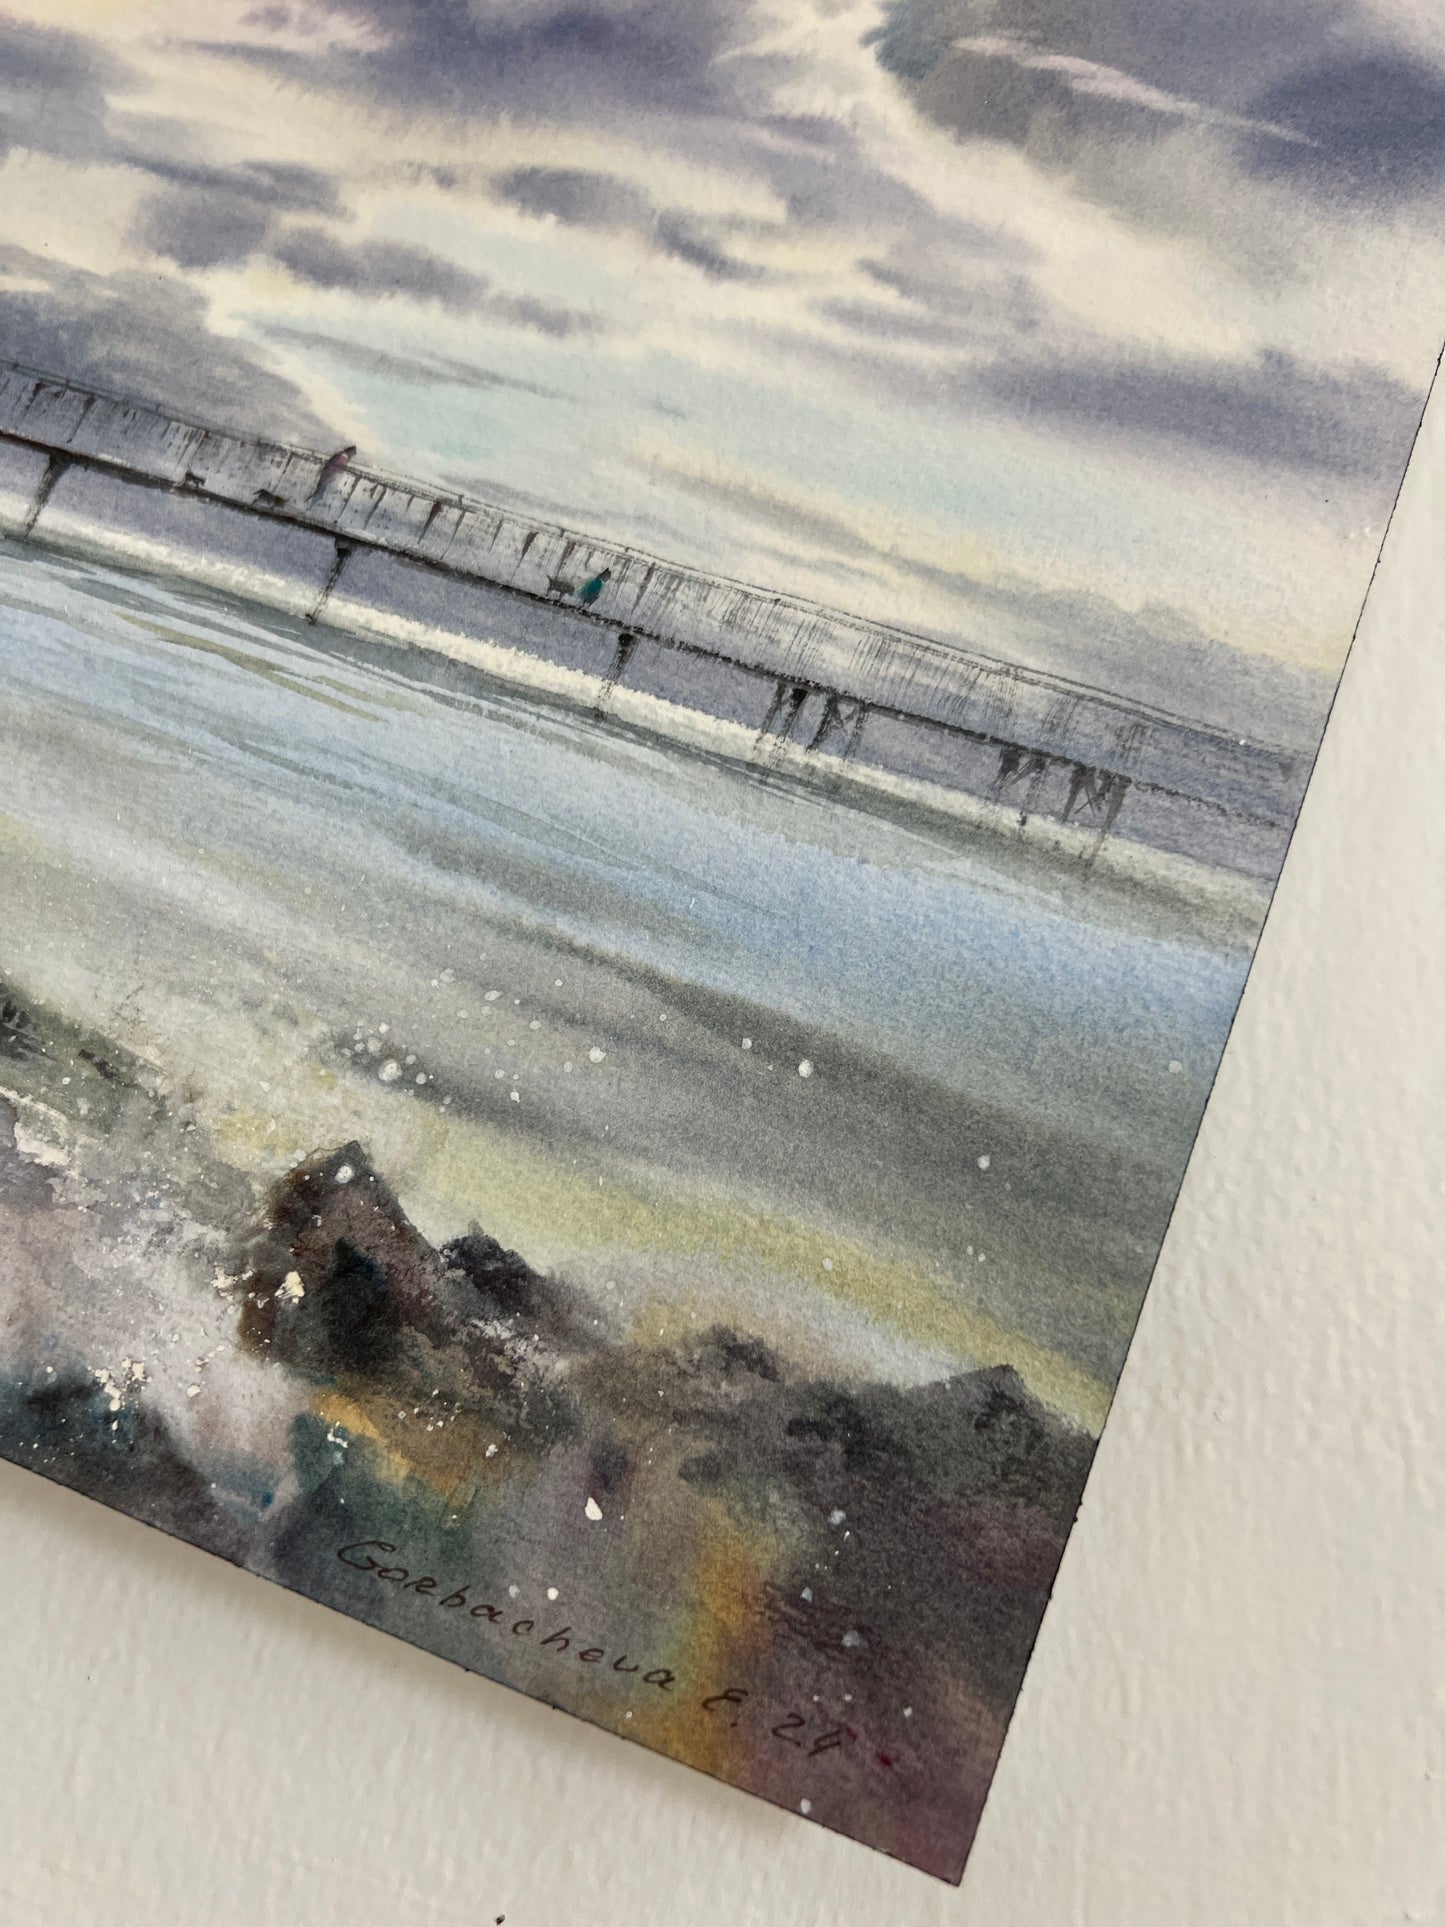 Seaside Serenity: Original Watercolor Painting 'Walk along the Sea Bridge #2'